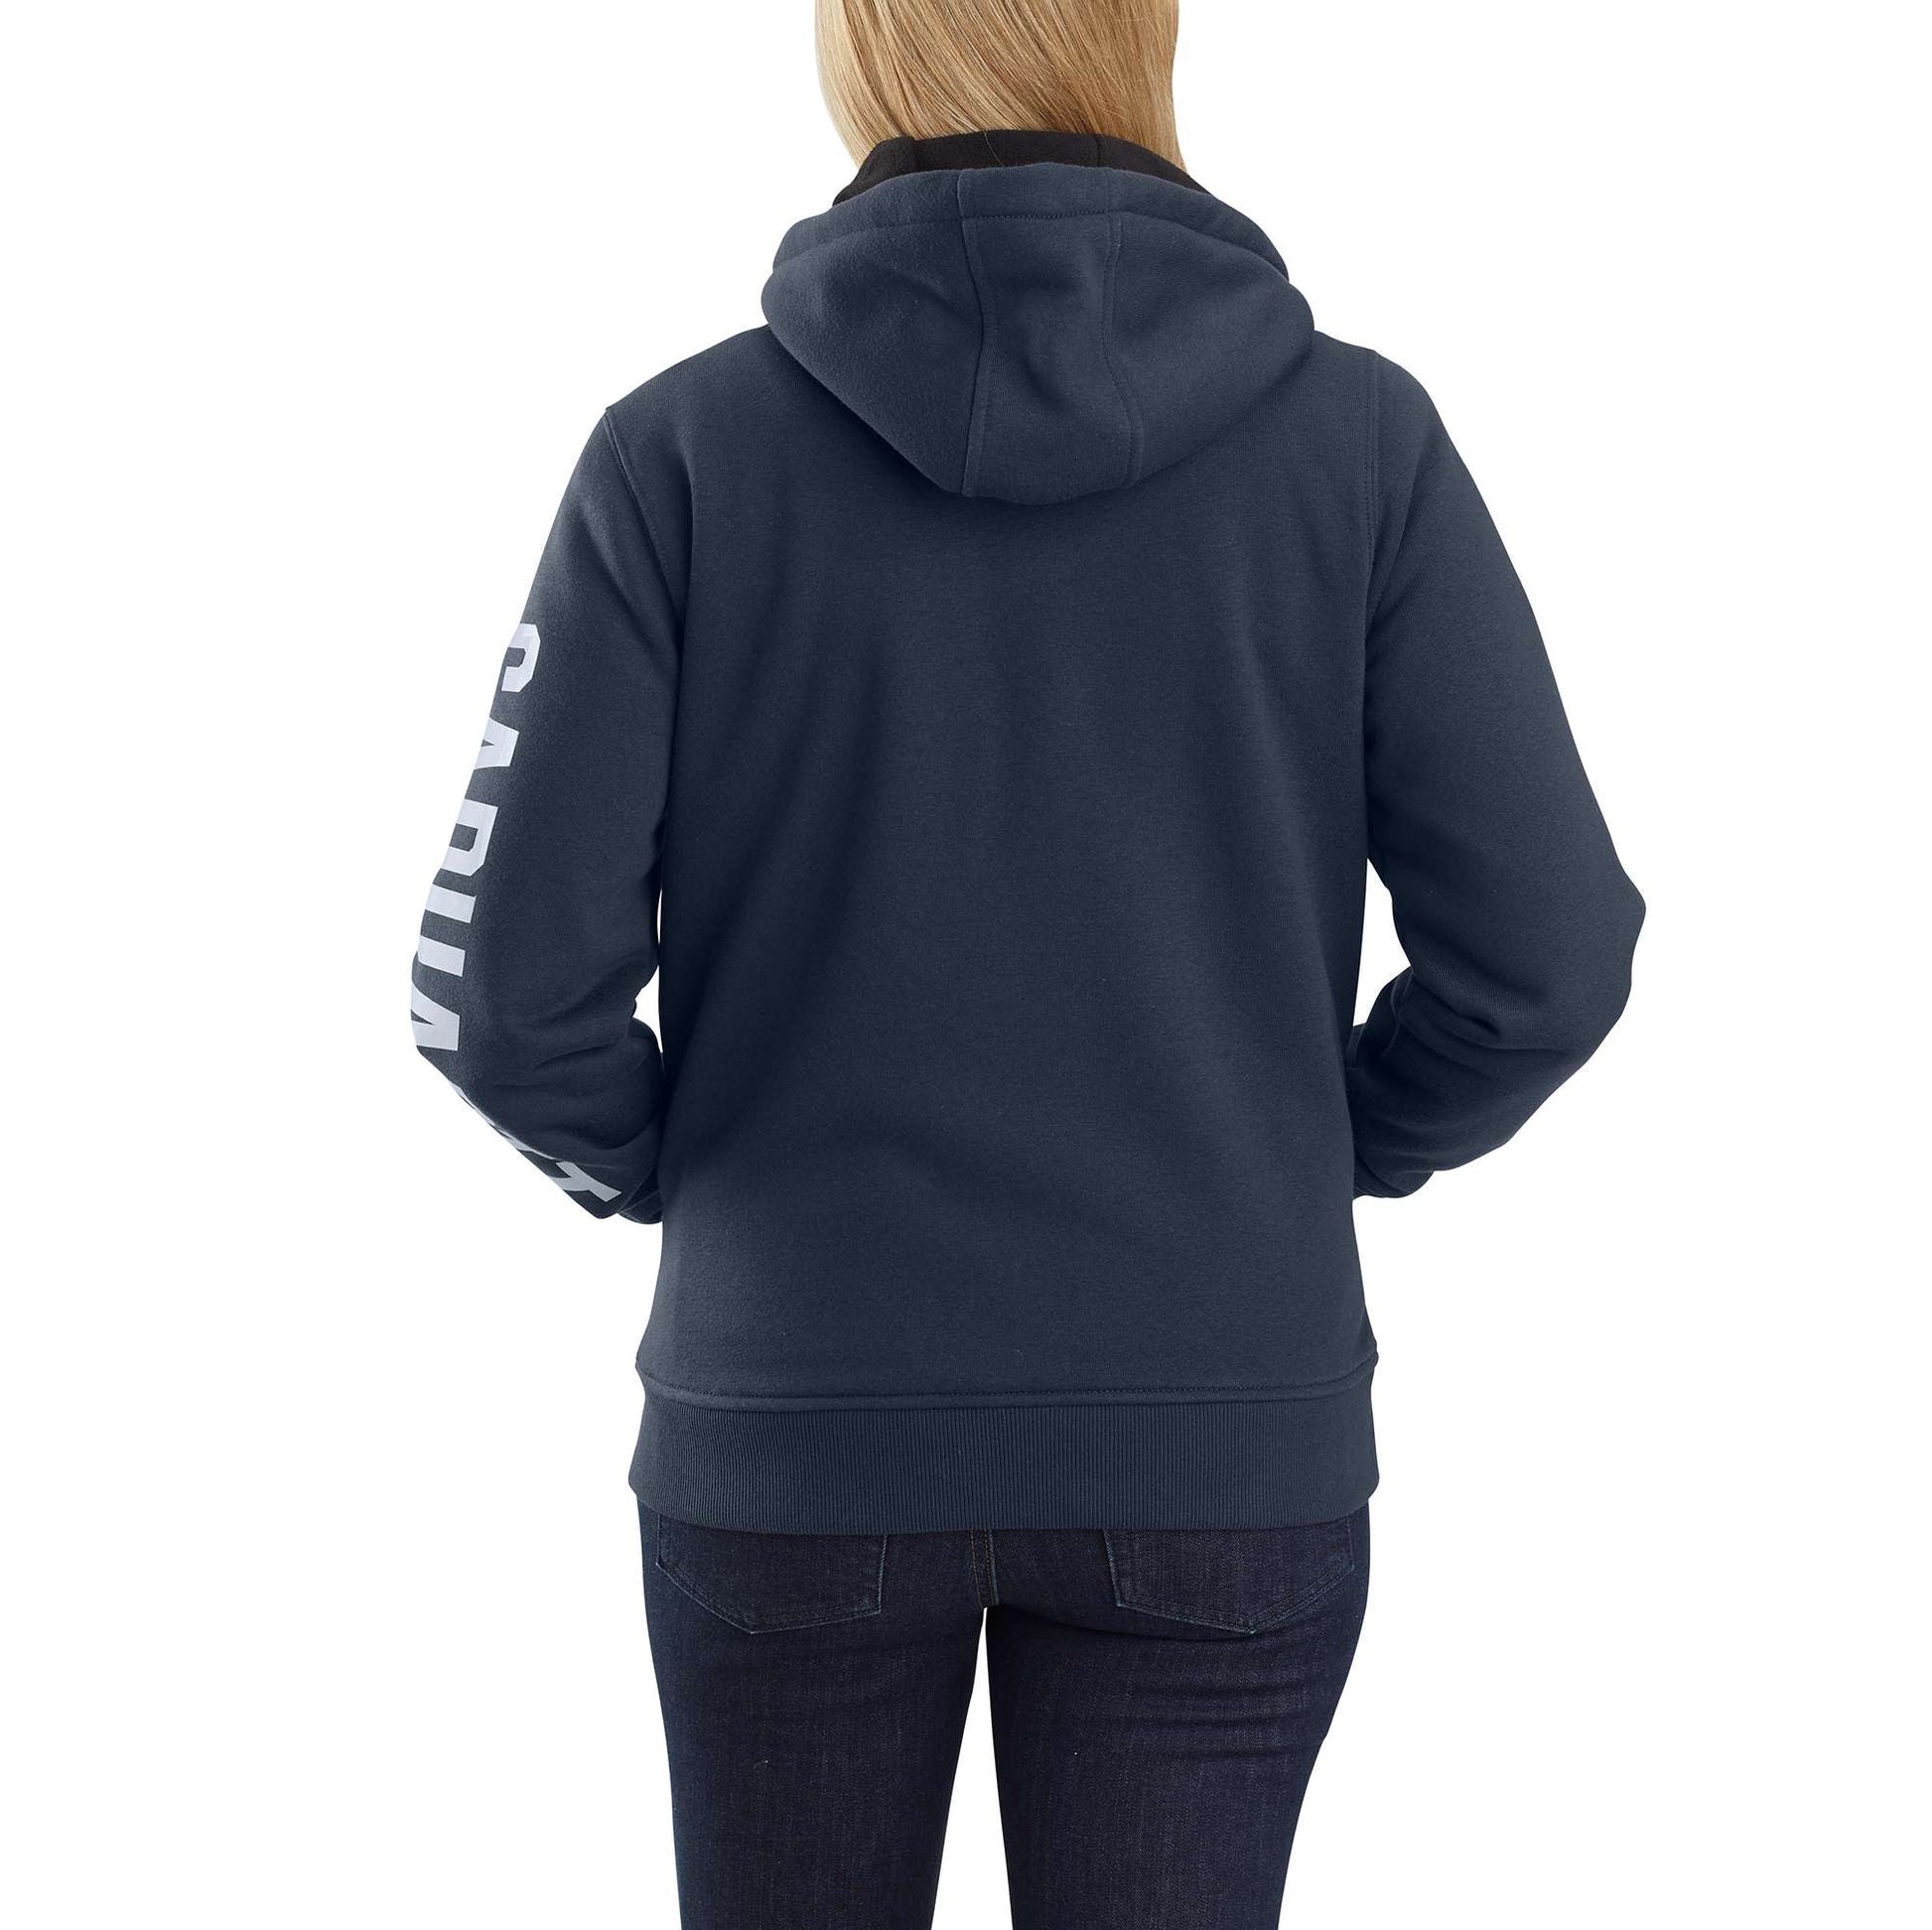 Carhartt Women's Relaxed Fit Rain Defender Graphic Sweatshirt, Black